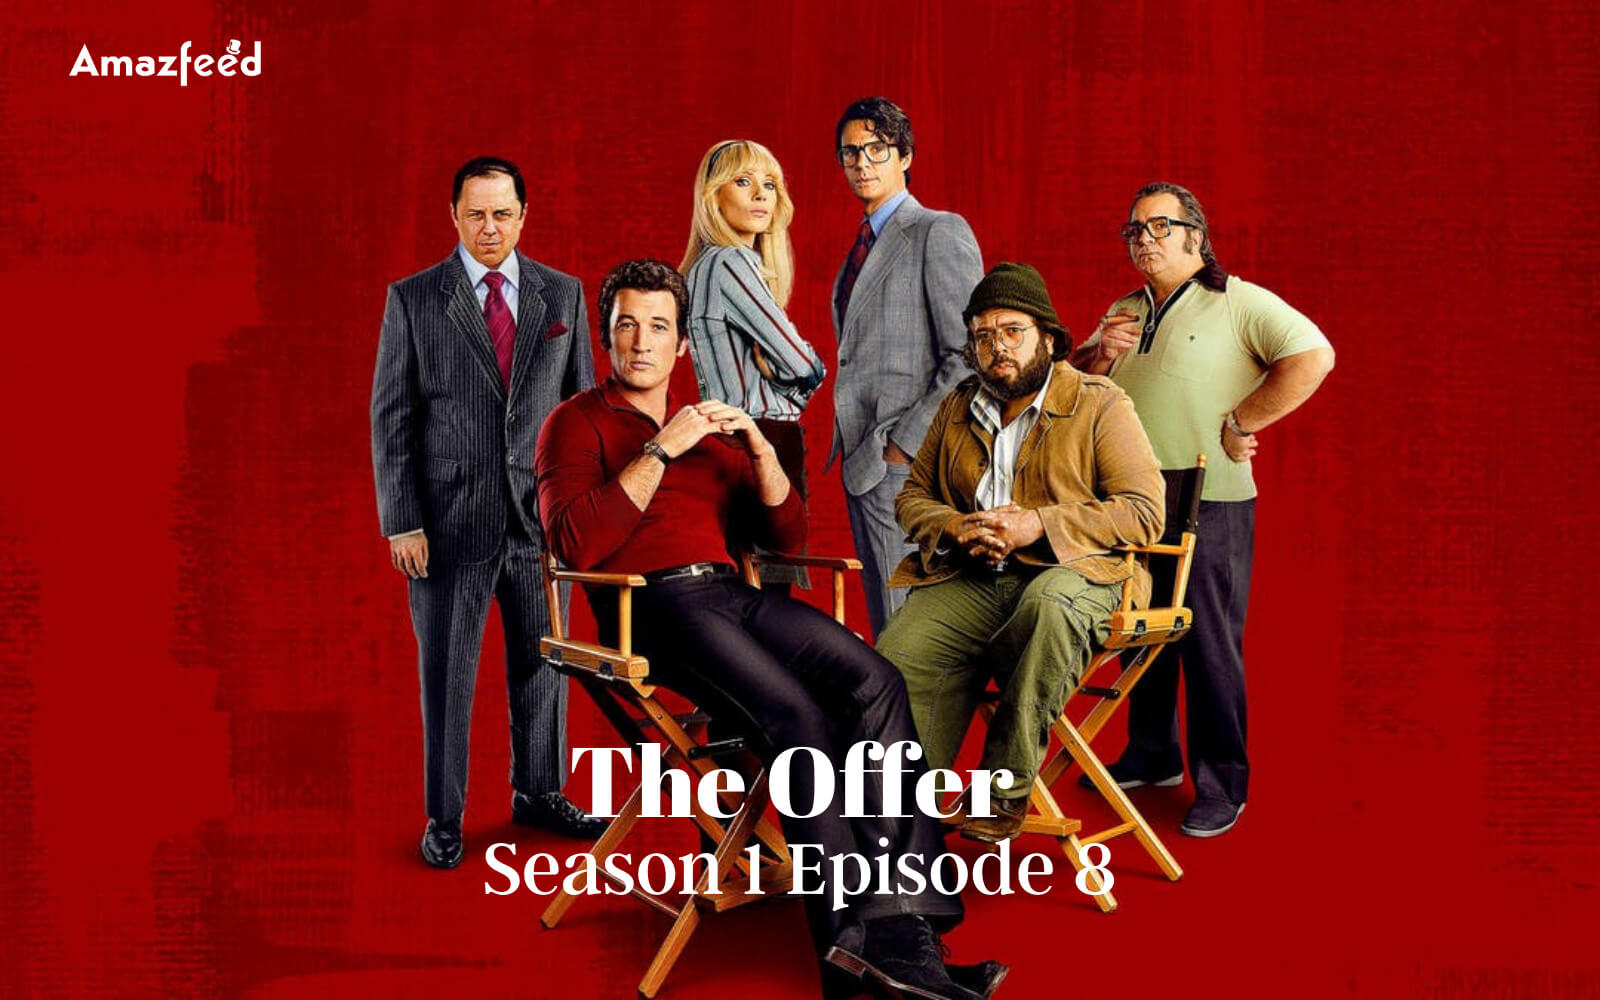 The Offer Season 1 Episode 8 Release date